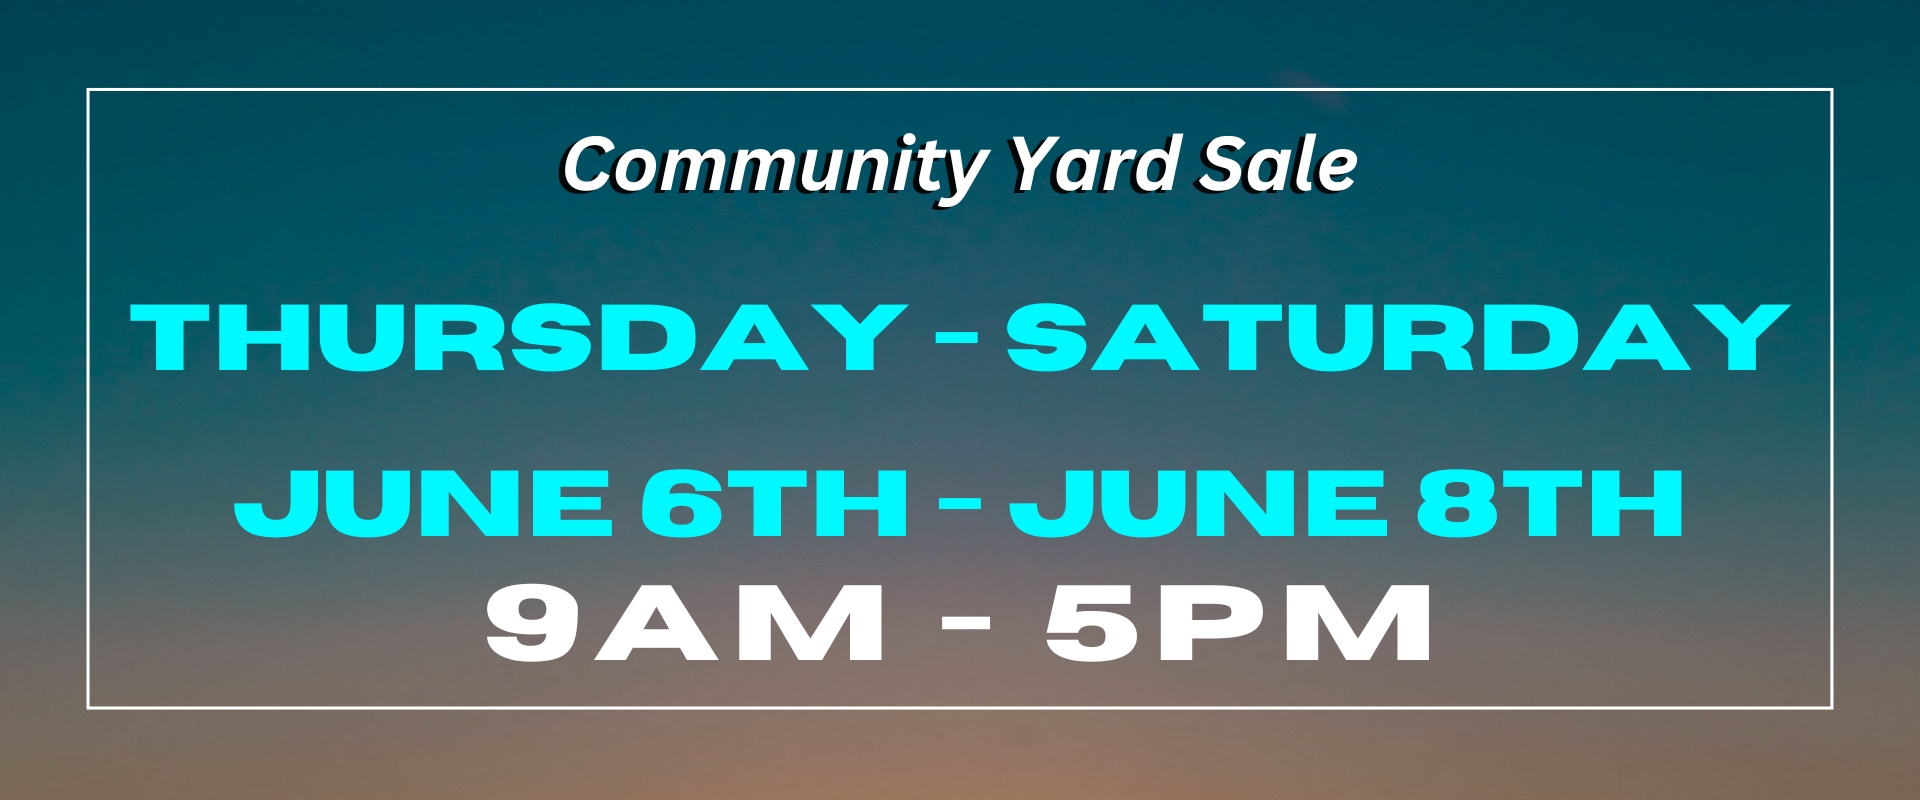 Community Yard Sale Thursday - Saturday June 6th - June 8th 9am - 5pm